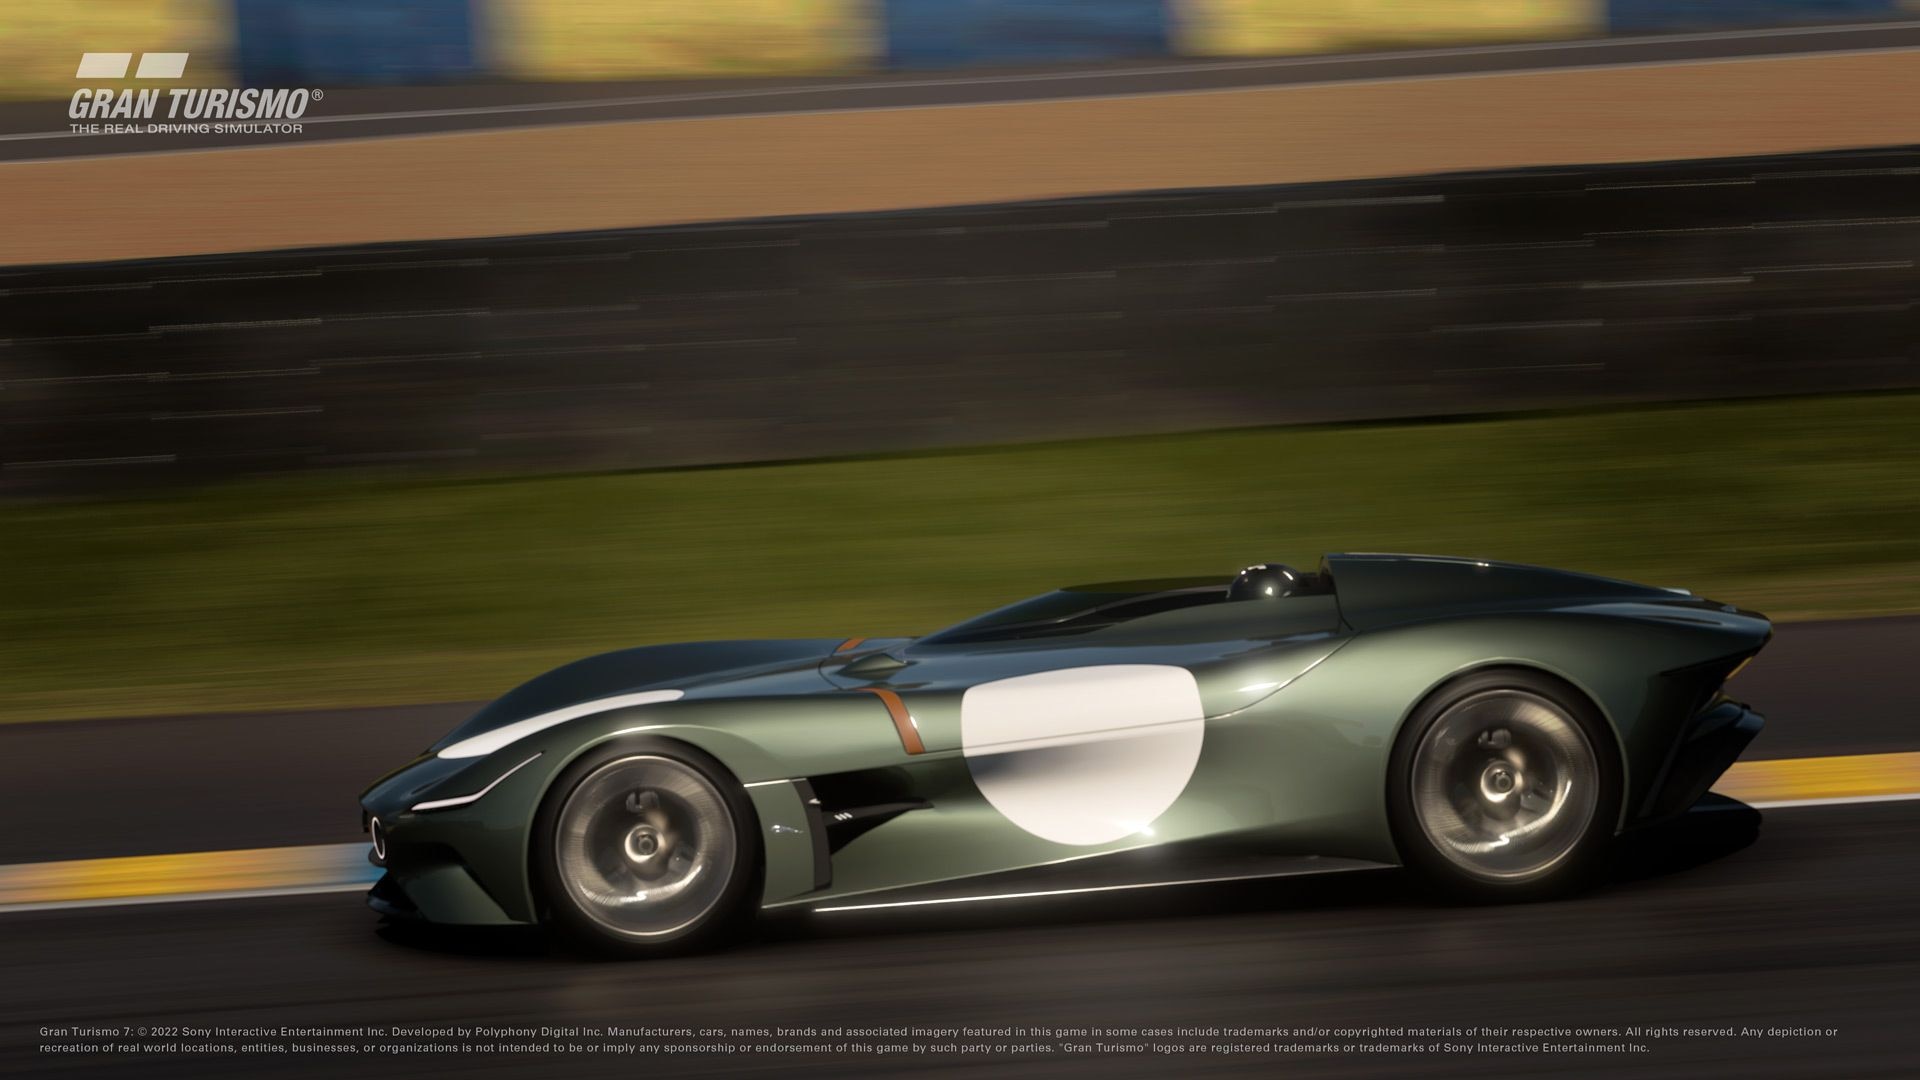 Jaguar Vision Gran Turismo Roadster concept